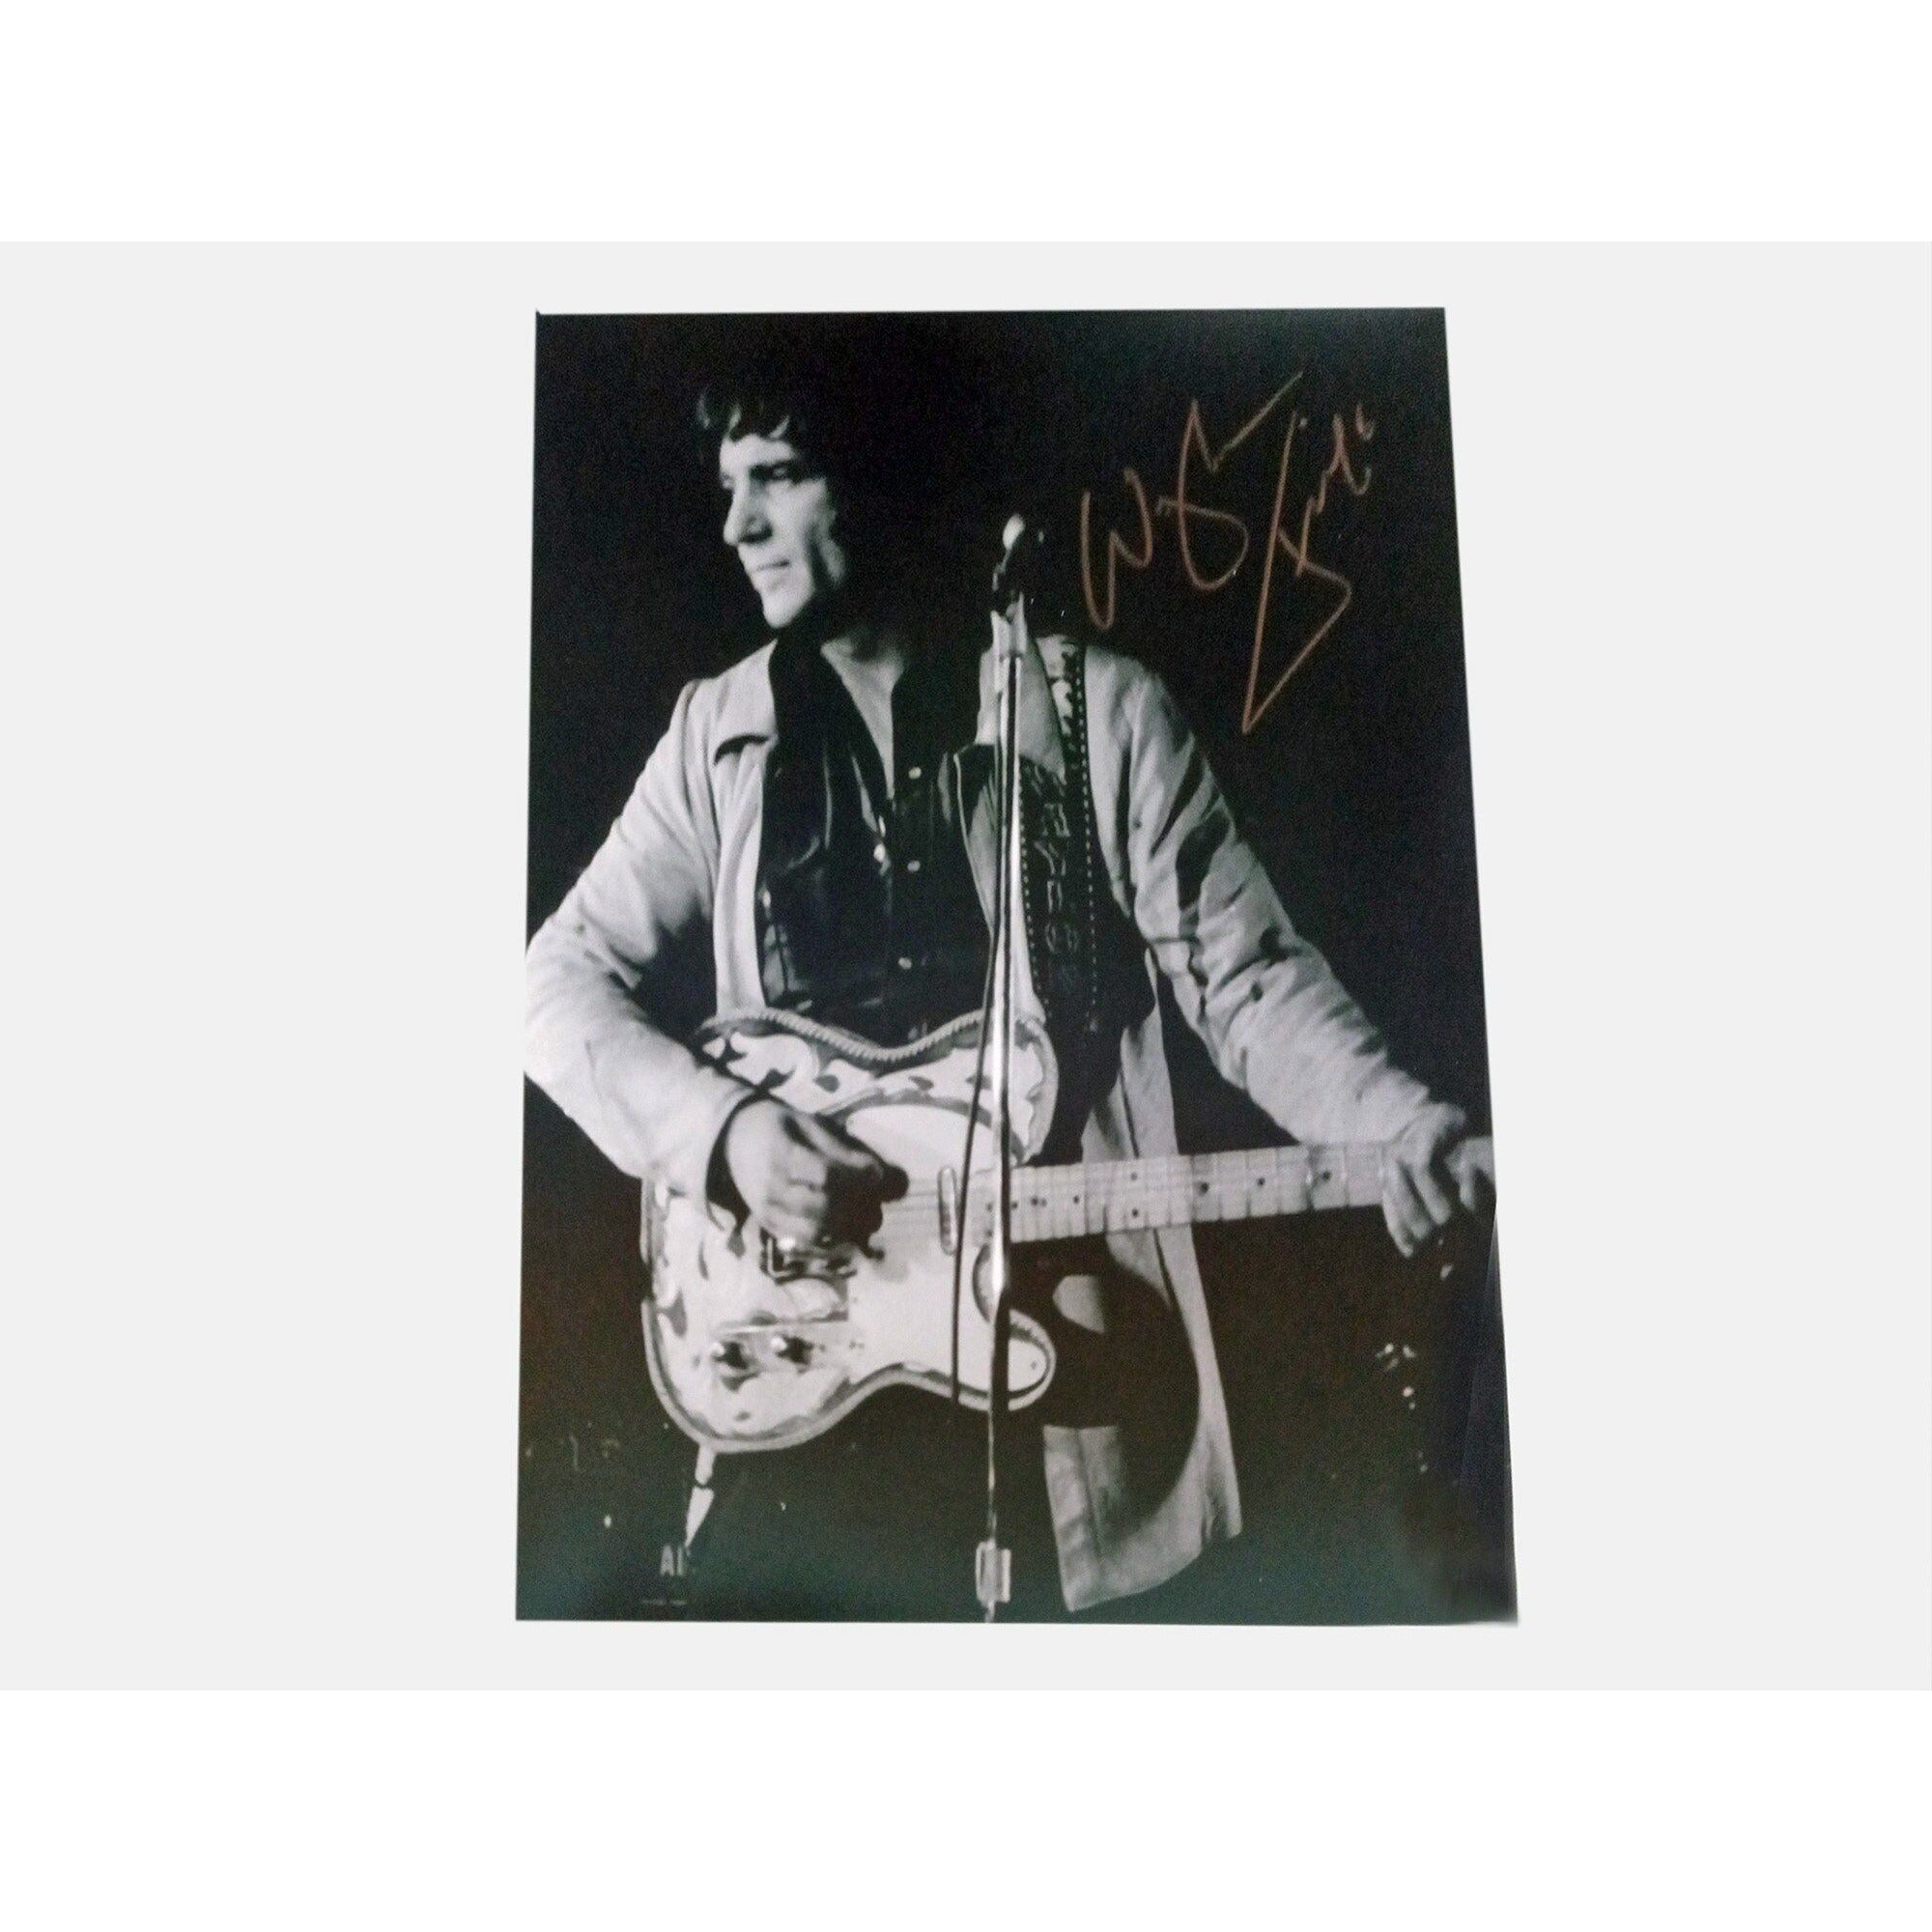 Waylon Jennings 8 by 10 signed photo with proof